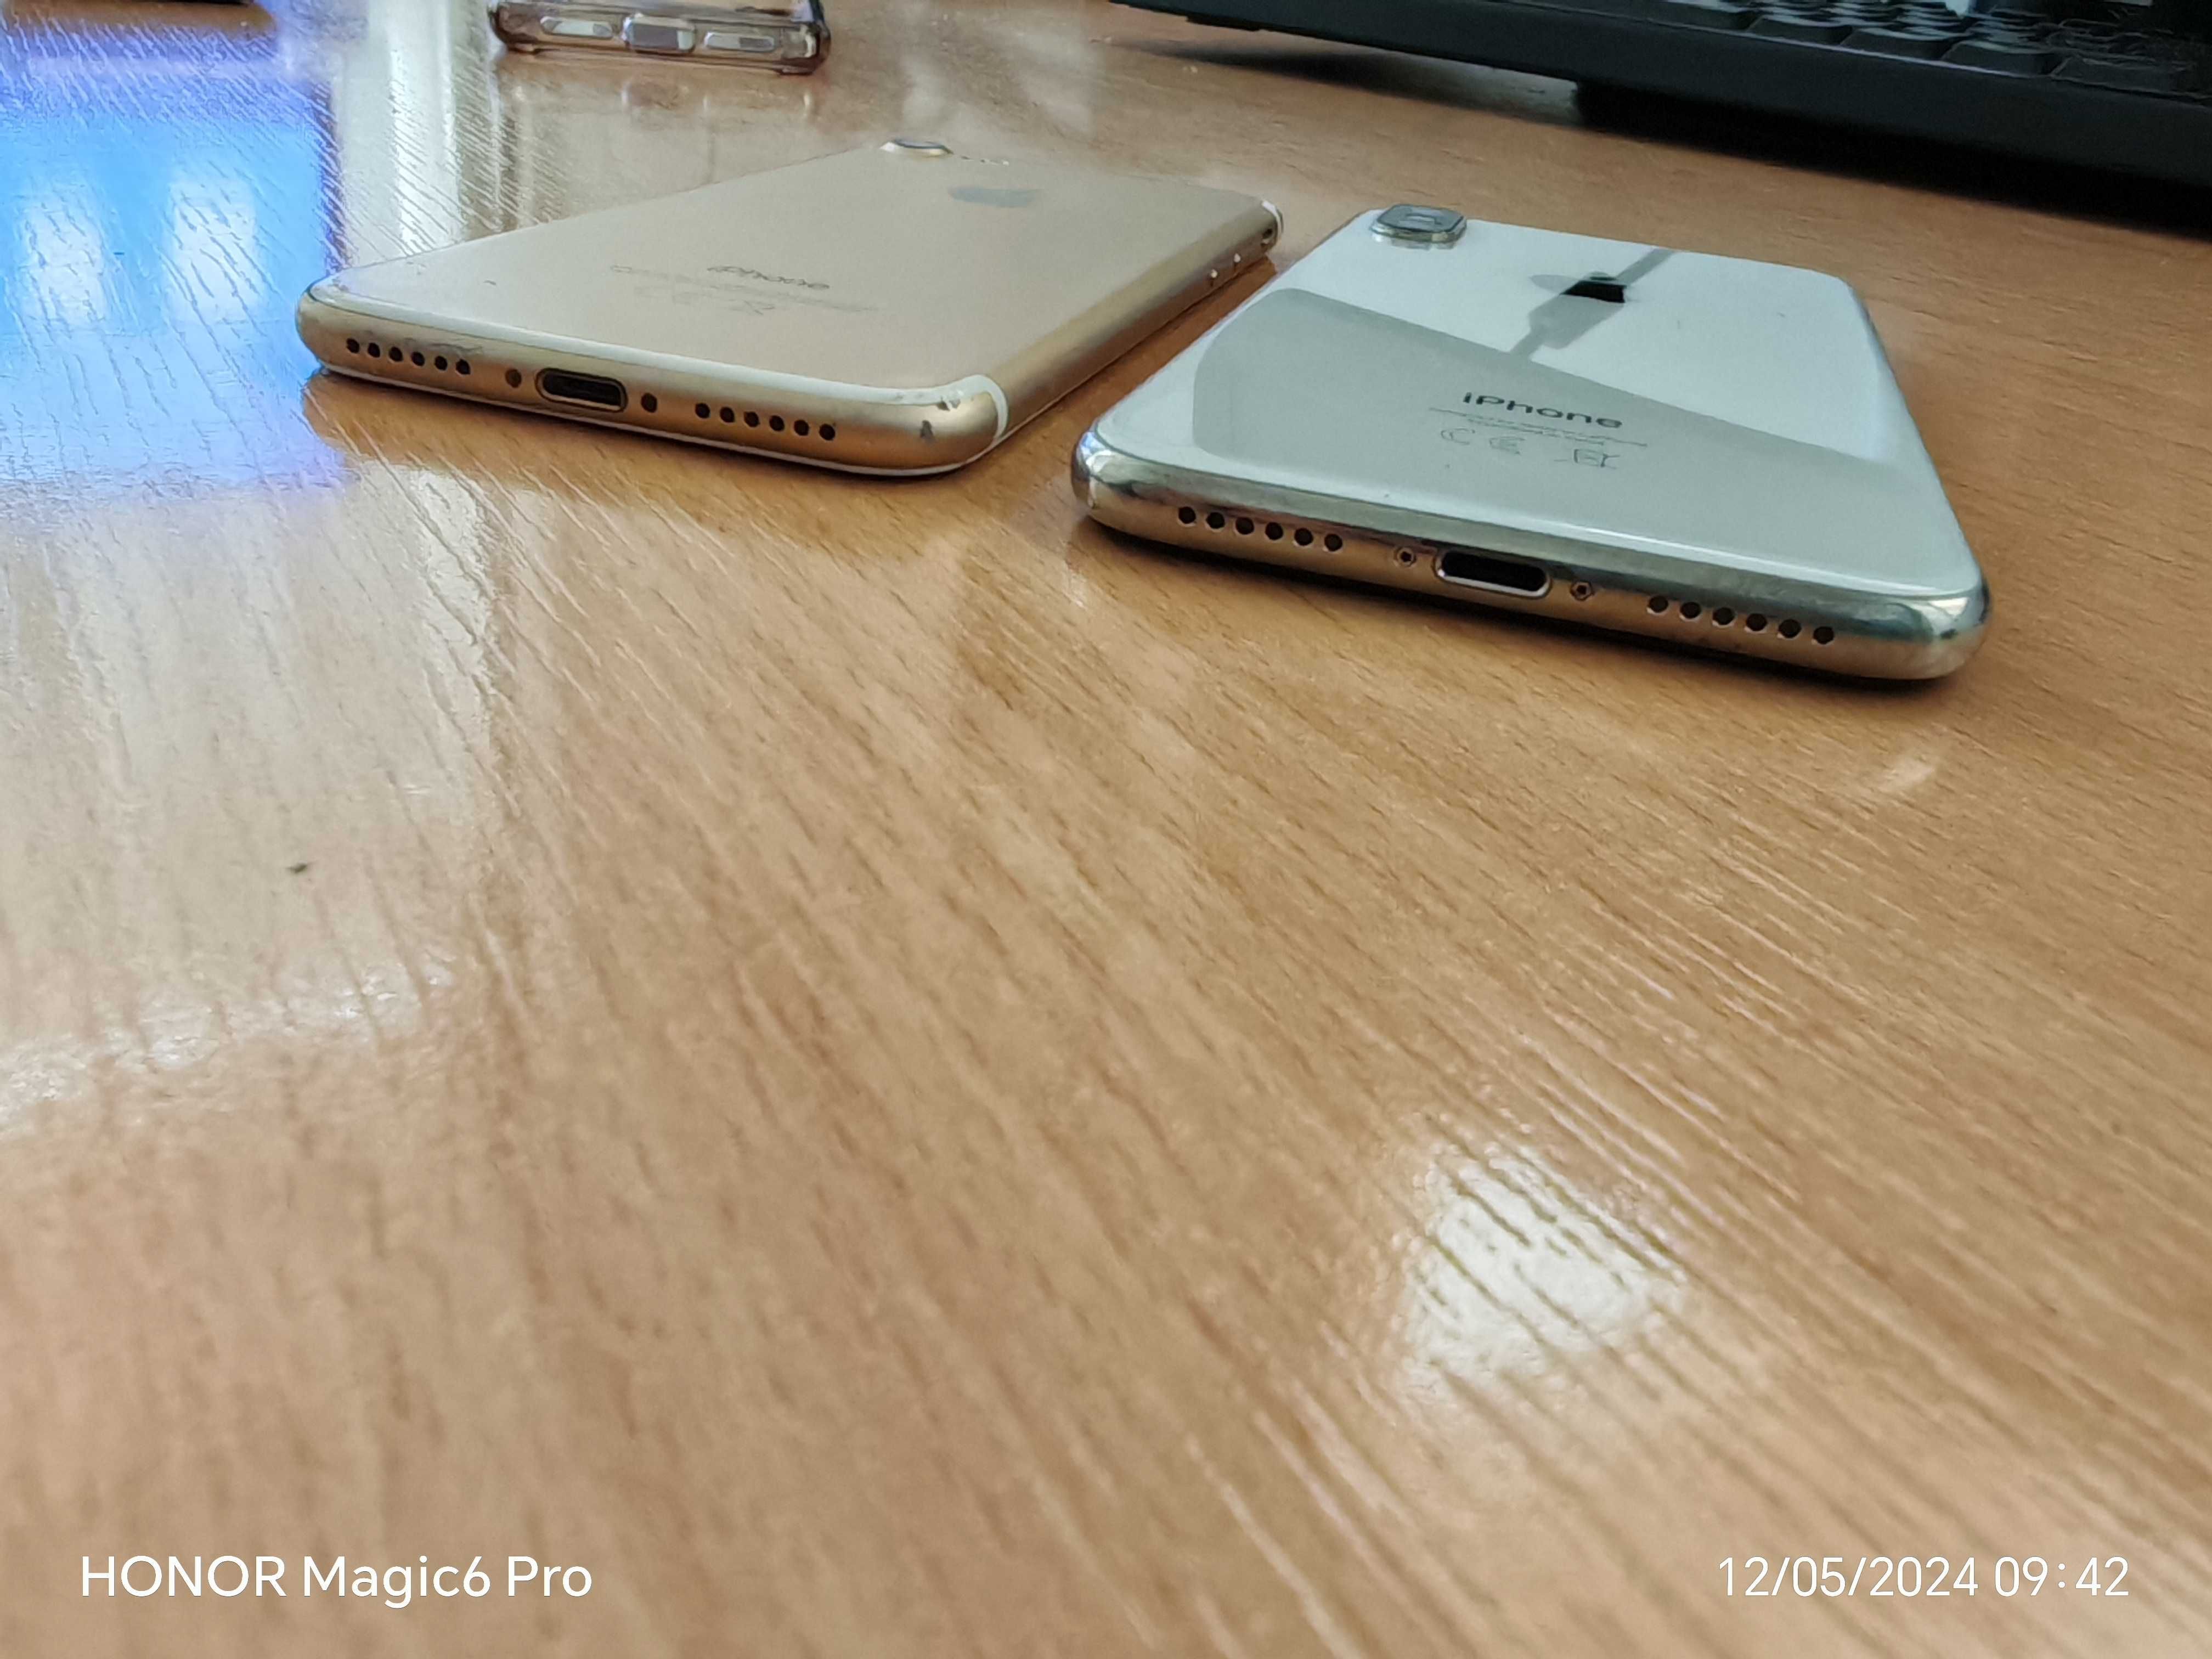 iPhone X 256 GB Silver и iPhone 7 32 GB Gold